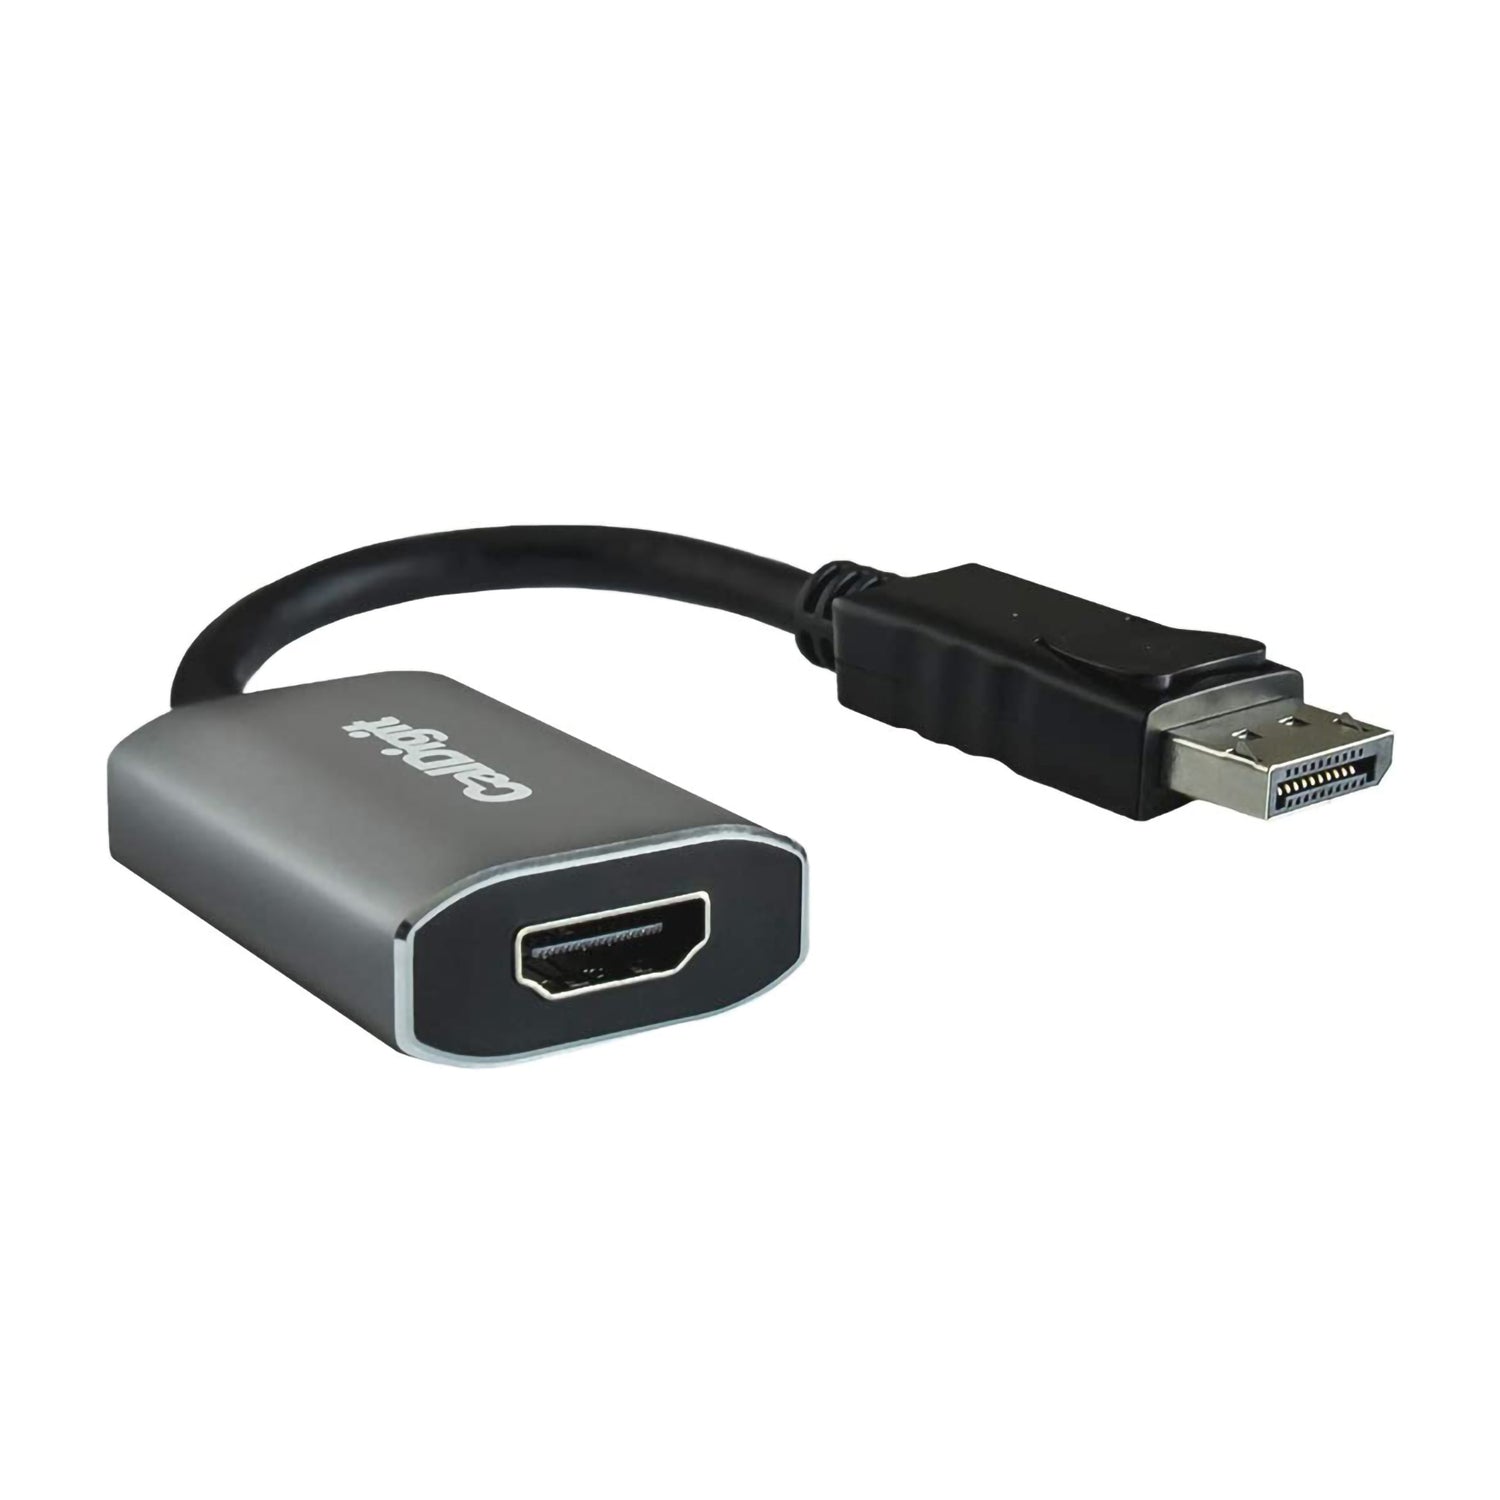 Active DisplayPort 1.2 to HDMI 2.0 Adapter – CalDigit US Shop